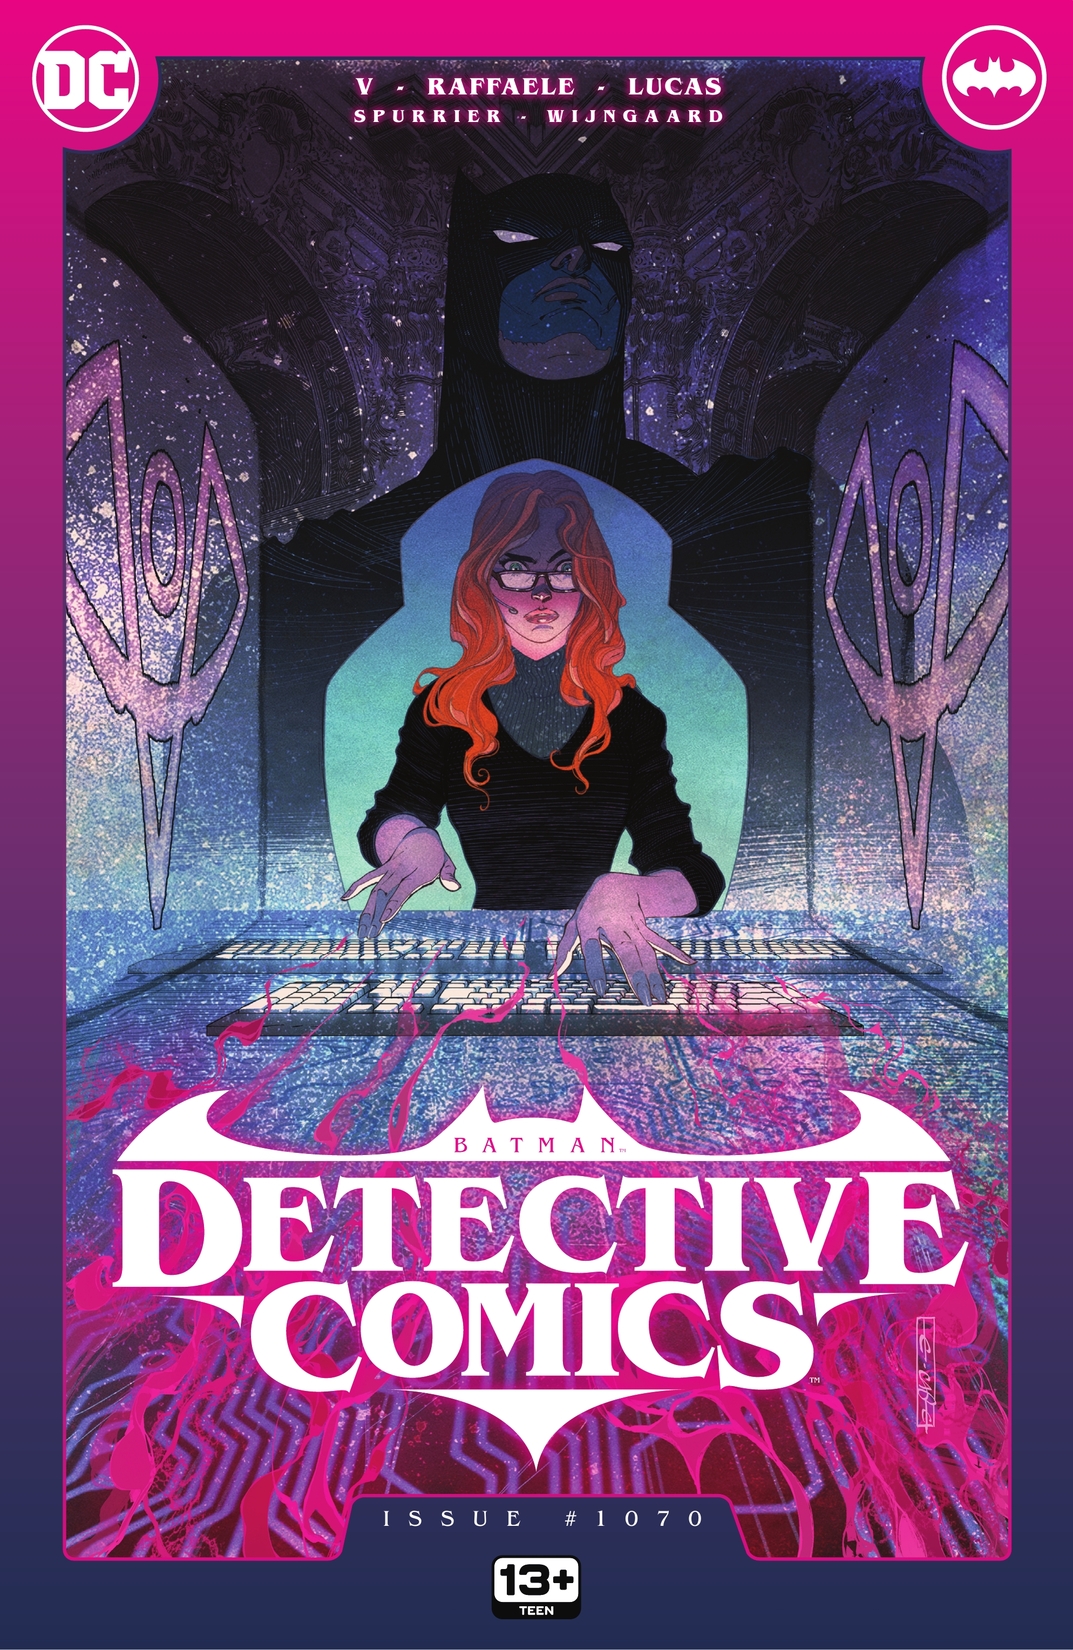 Detective Comics (2016-) #1070 preview images